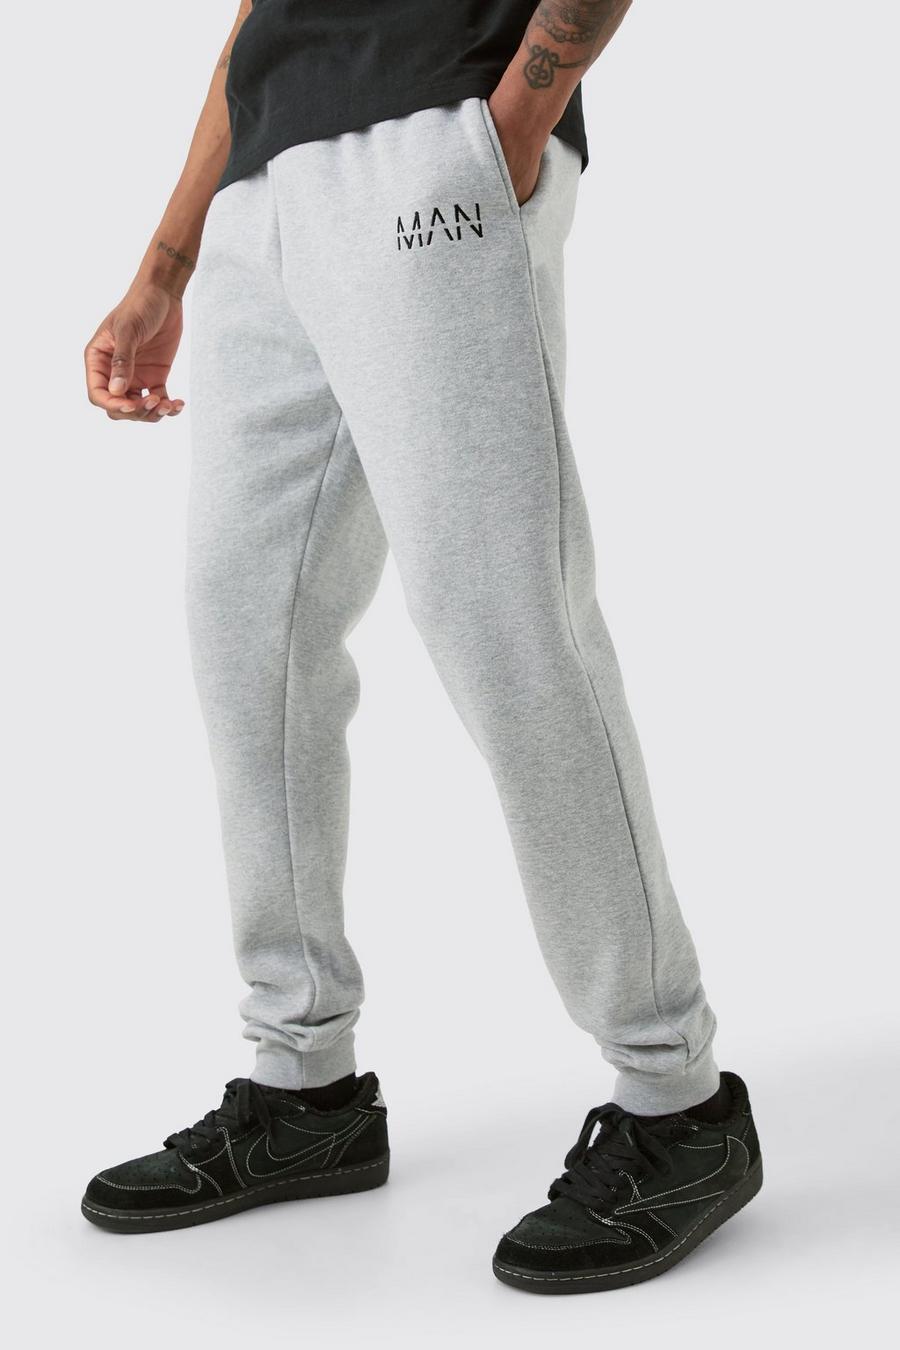 Pantalón deportivo Tall MAN ajustado en gris jaspeado, Grey marl